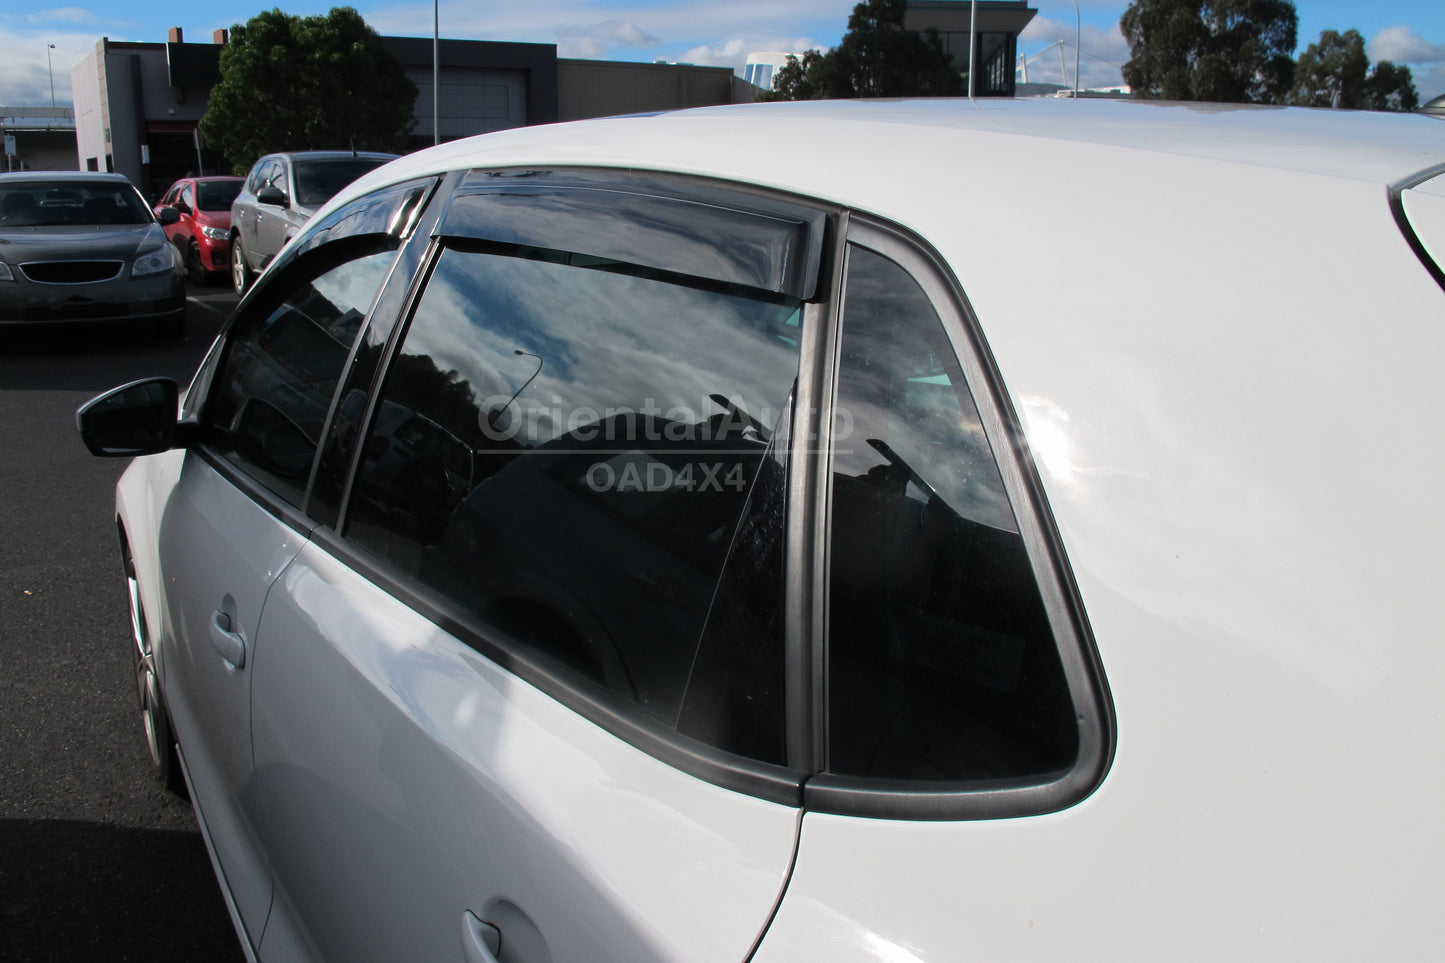 Premium Weather Shields Weathershields Window Visors For Volkswagen Polo 6R Series Hatch 2010-2017